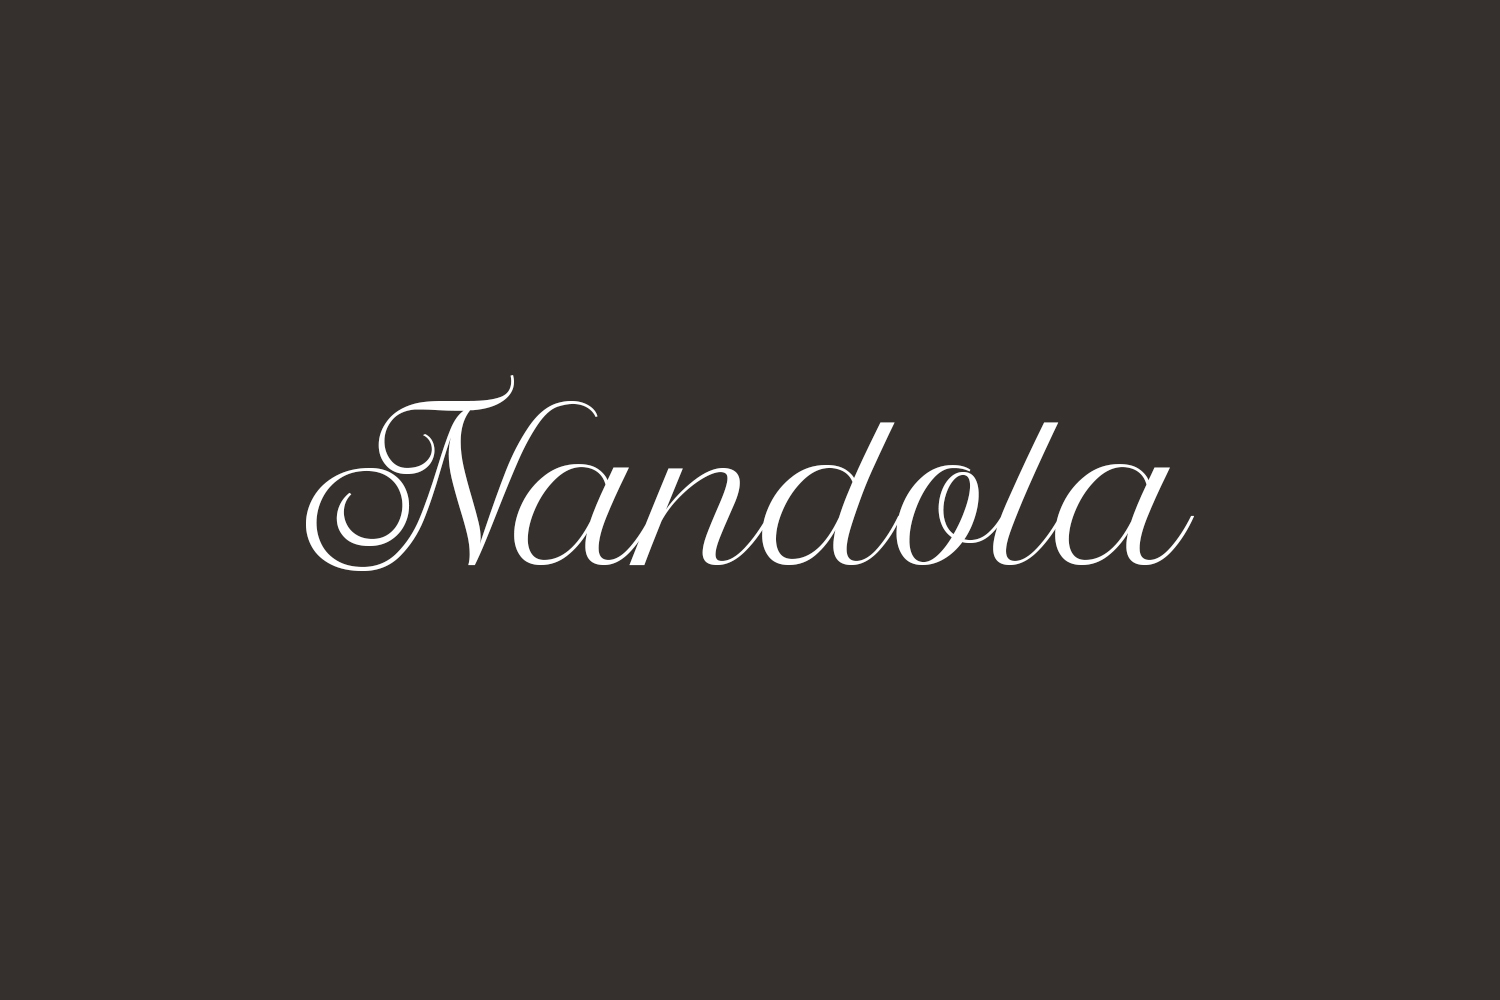 Nandola Free Font